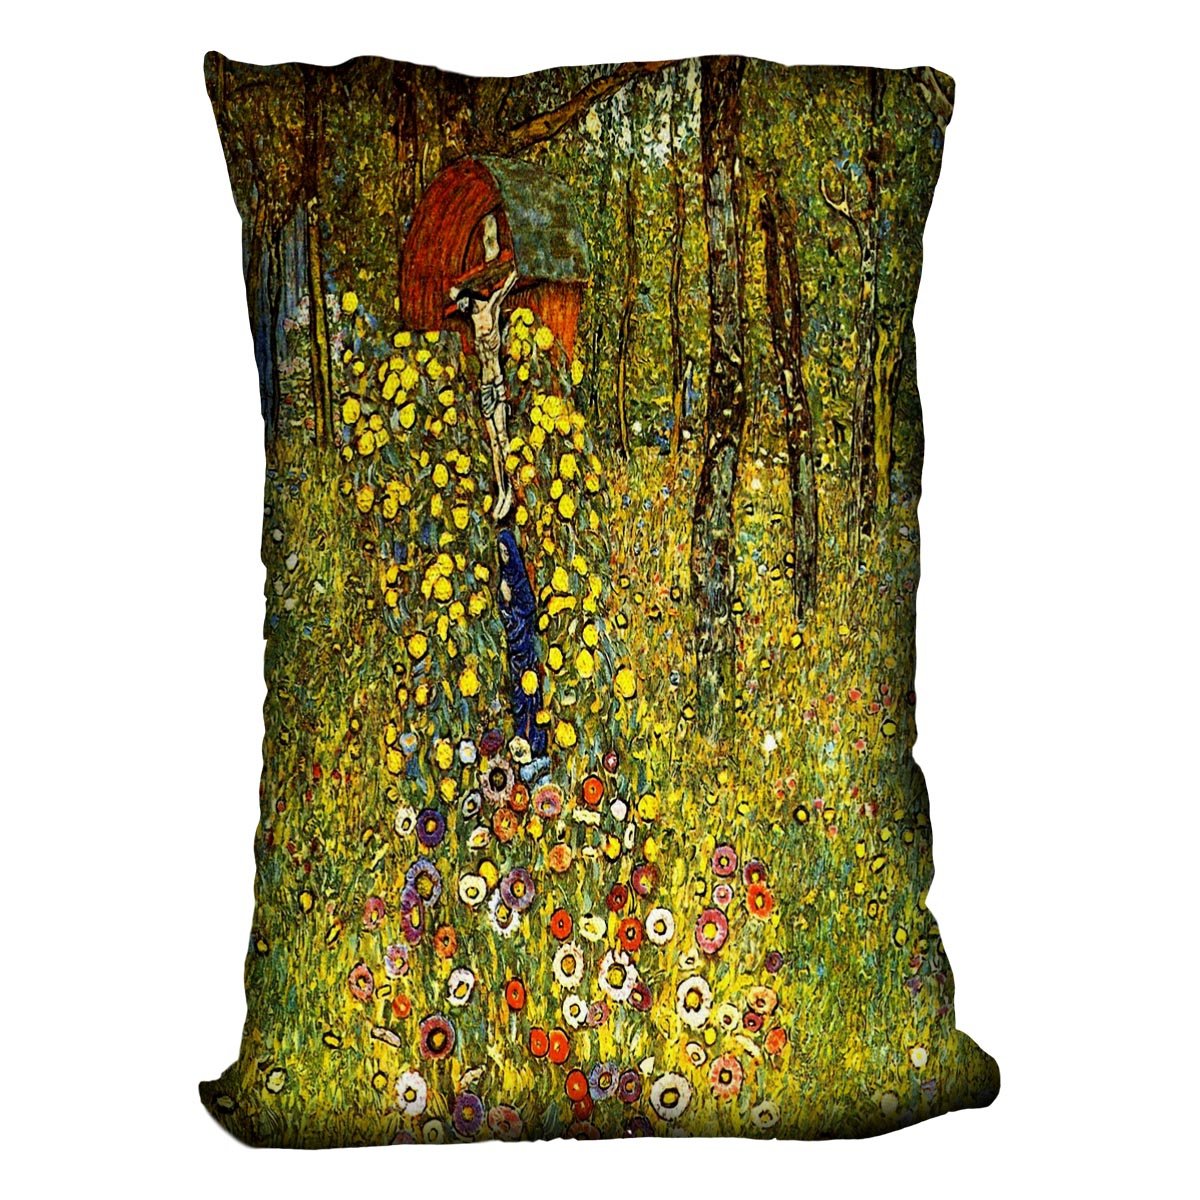 Garden with crucifix by Klimt Throw Pillow